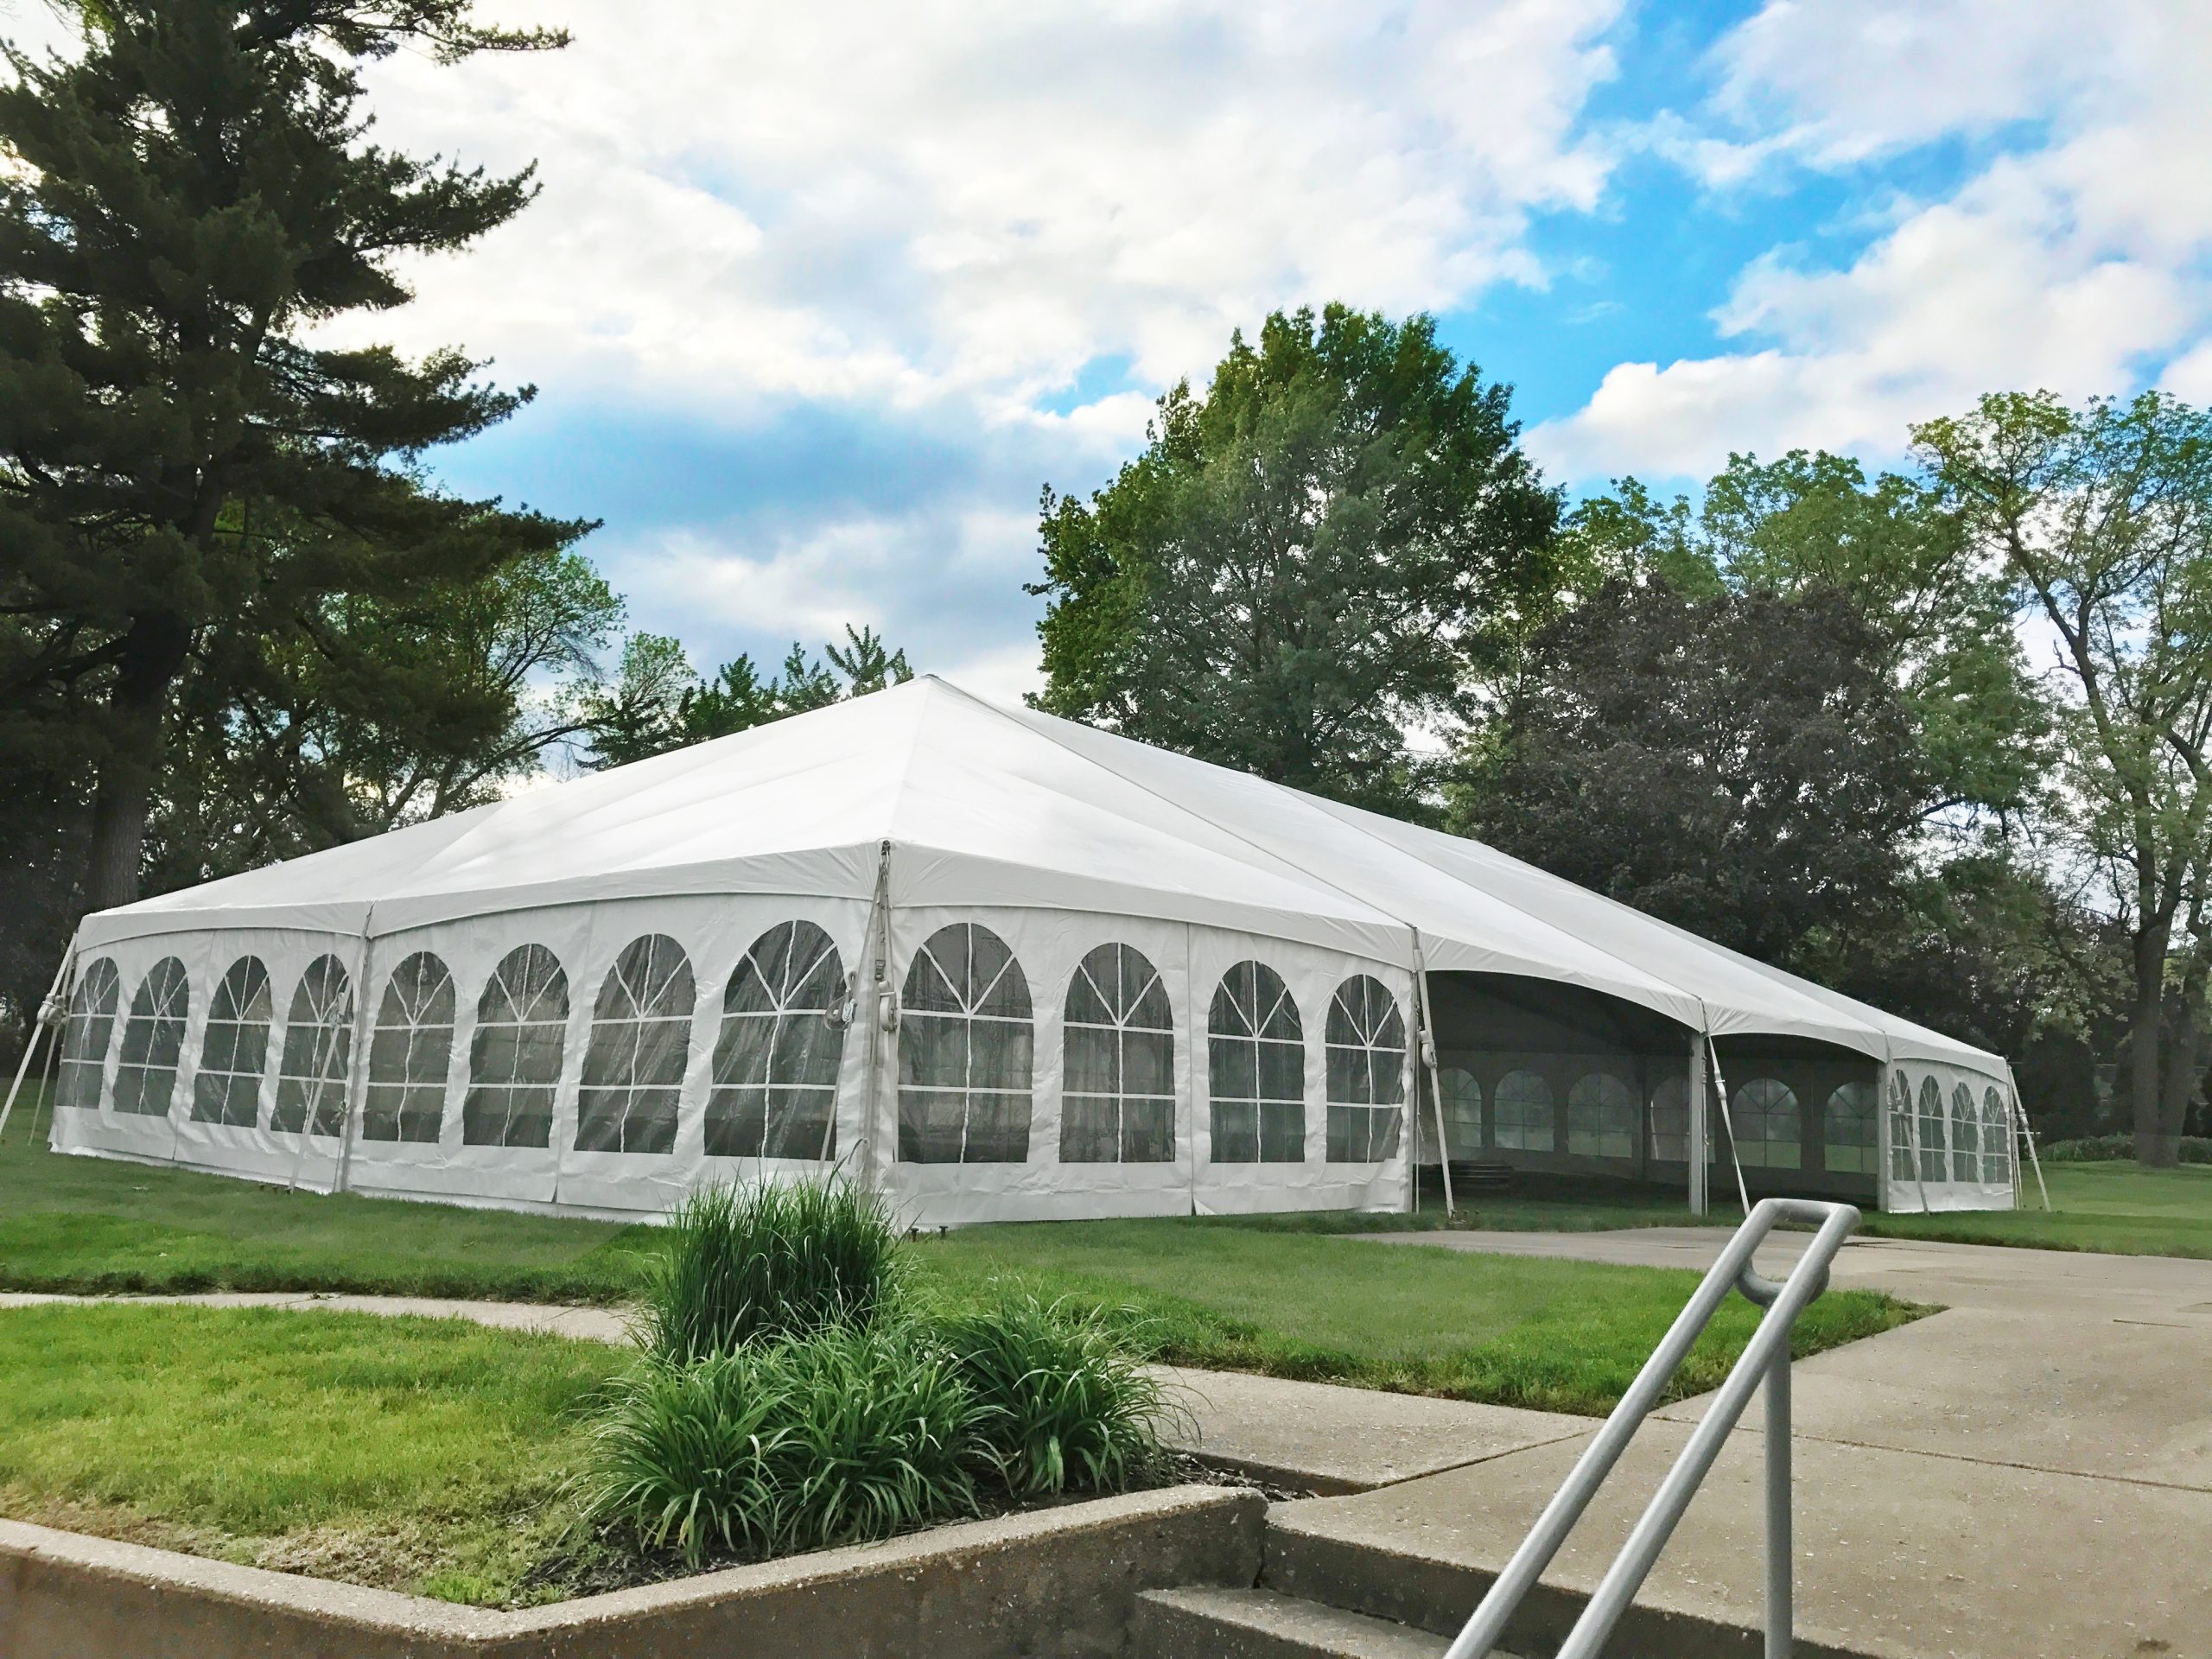 40' x 80' Hybrid wedding tent at Outing Club on Brady Street in Davenport iowa on 5-18-2017